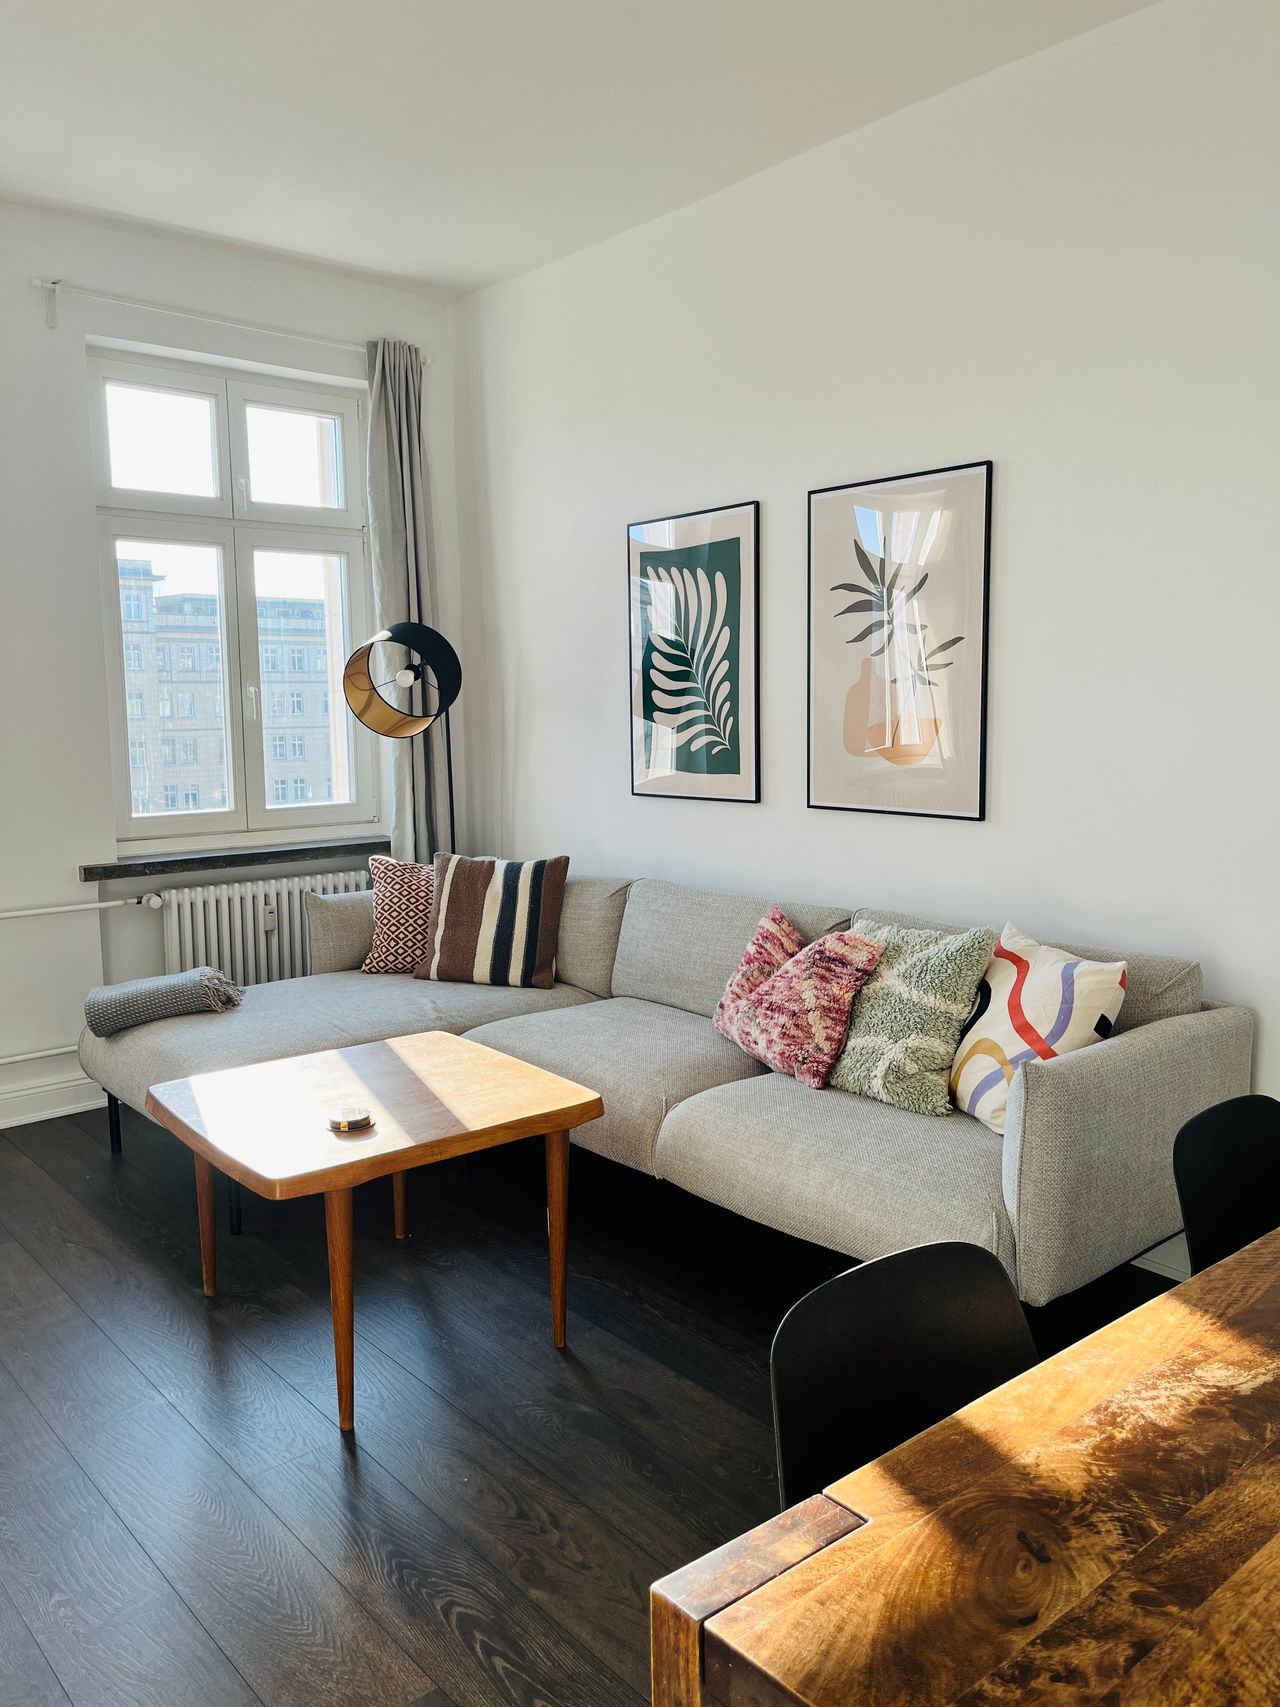 Fully furnished fantastic apartment near Boxhagener Platz in Friedrichshain